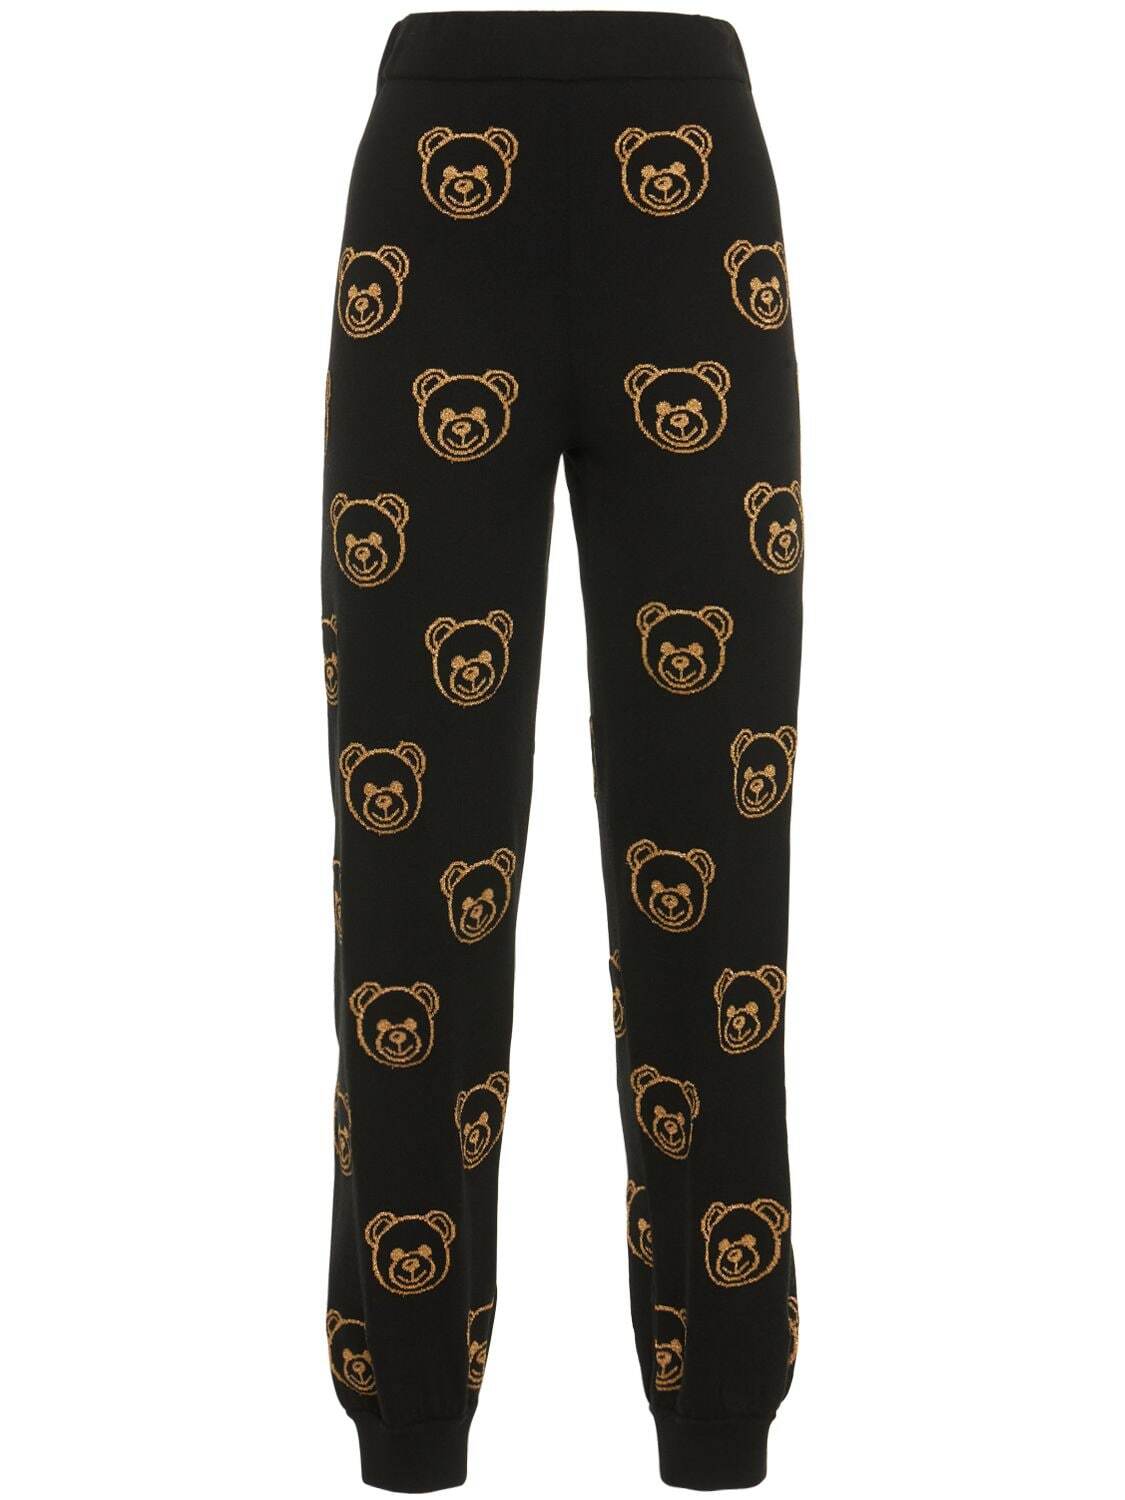 MOSCHINO Wool Knit Jacquard Teddy Sweatpants in black / gold